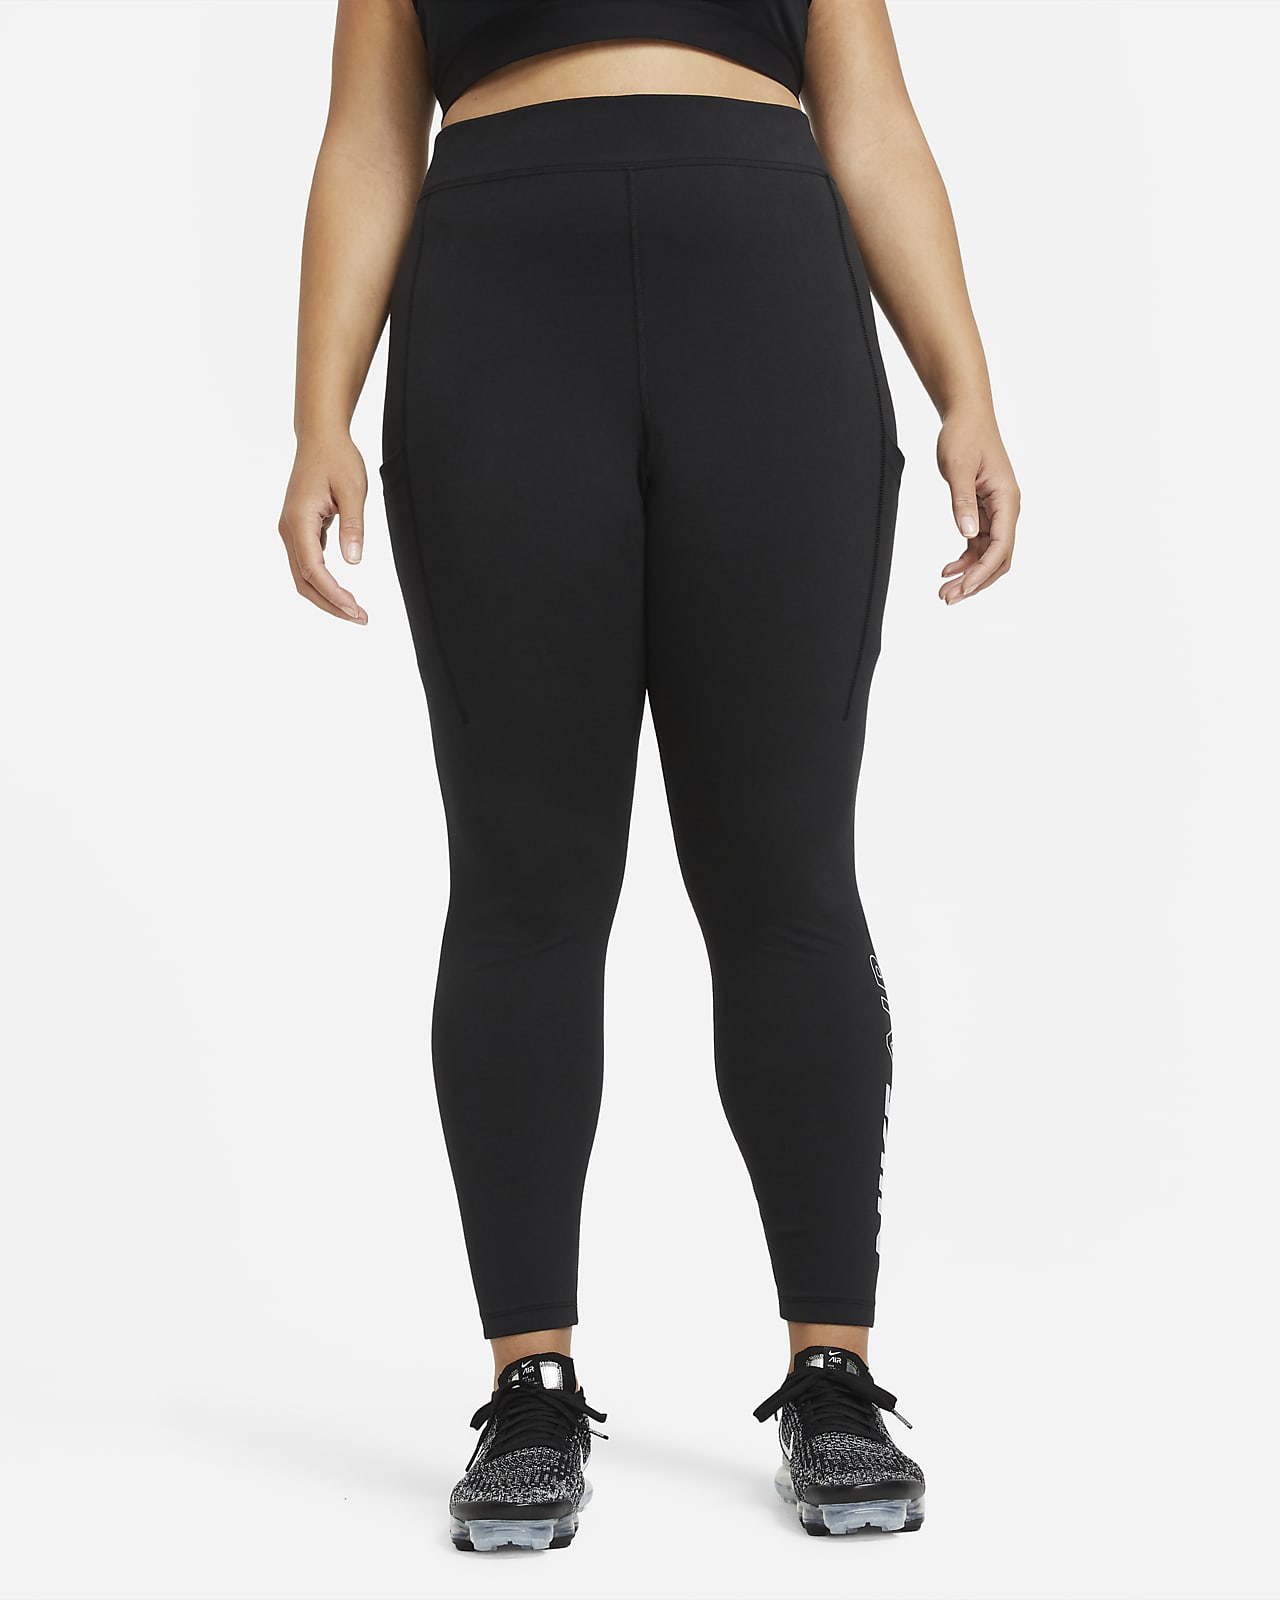 Nike Air Women's Leggings (Plus Size 